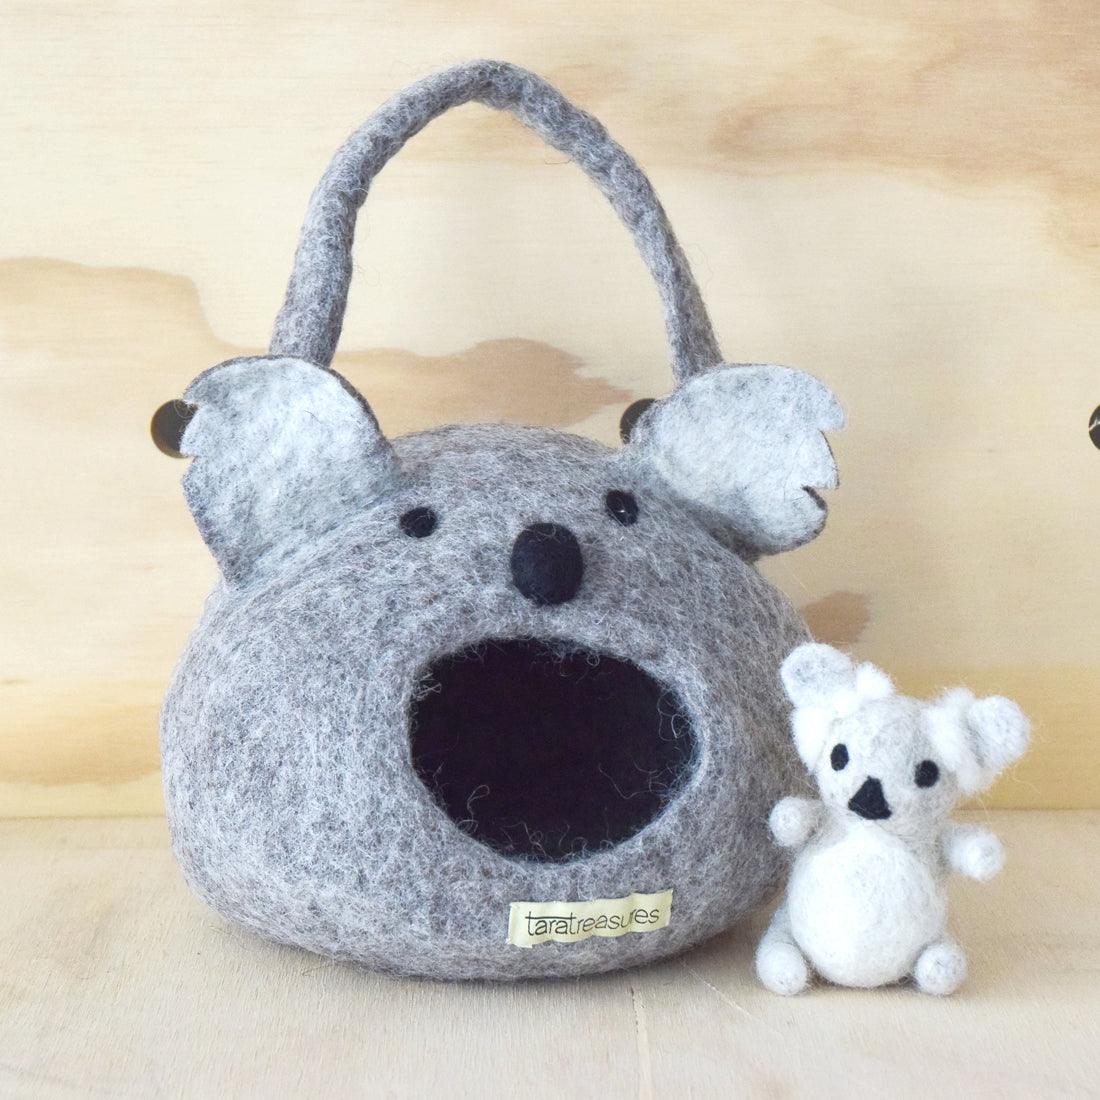 Felt Koala House Bag with Koala Toy - Tara Treasures